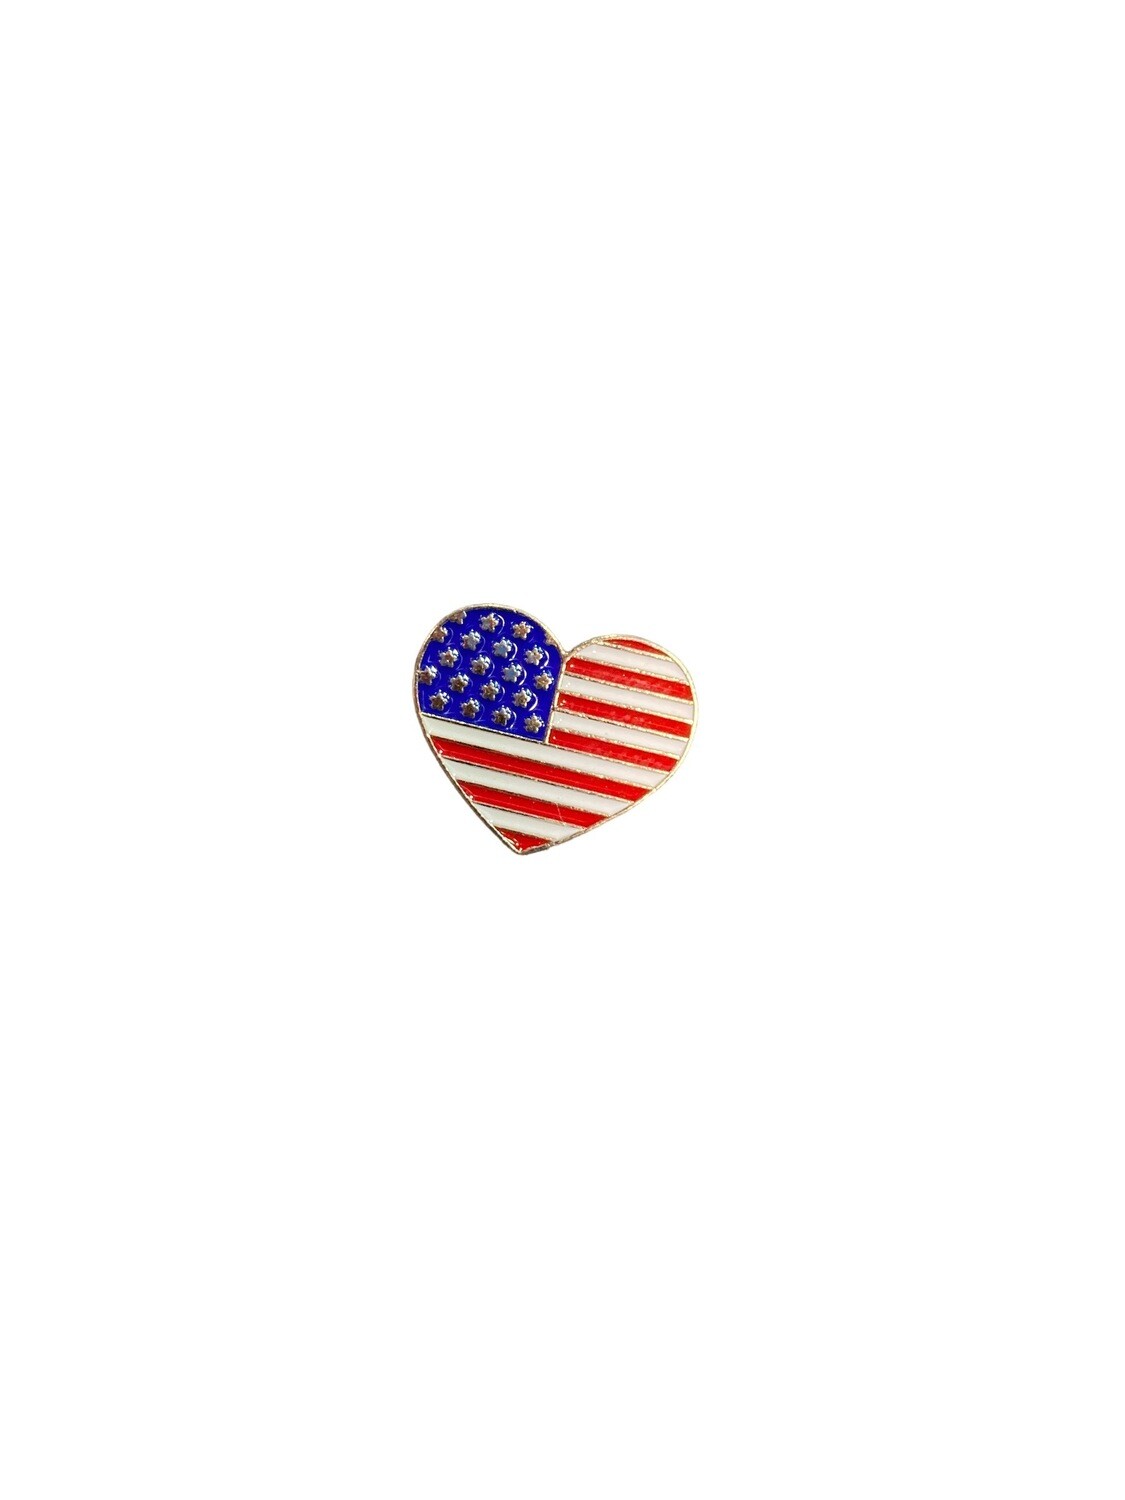 American Flag Heart Lapel Pin